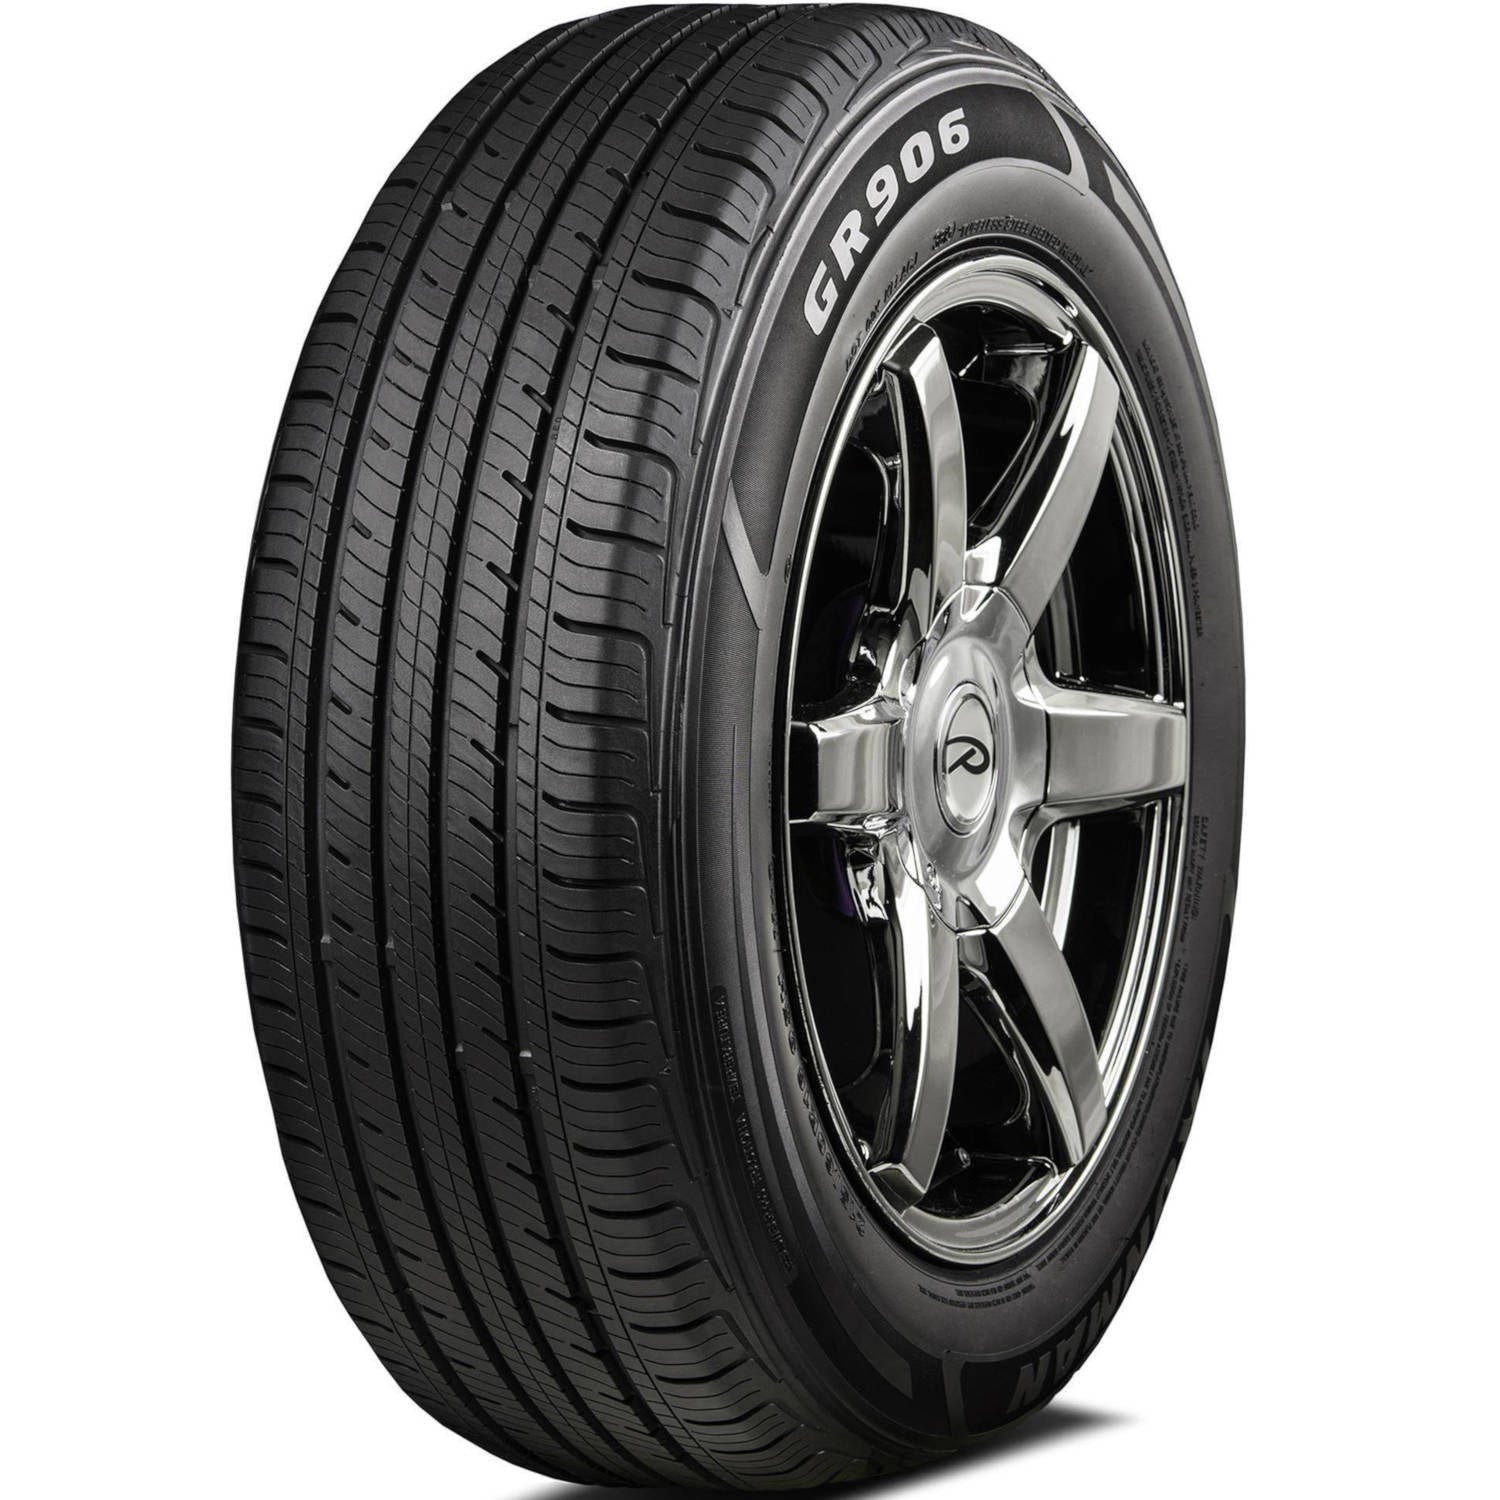 IRONMAN GR906 185/65R15 (24.4X7.3R 15) Tires